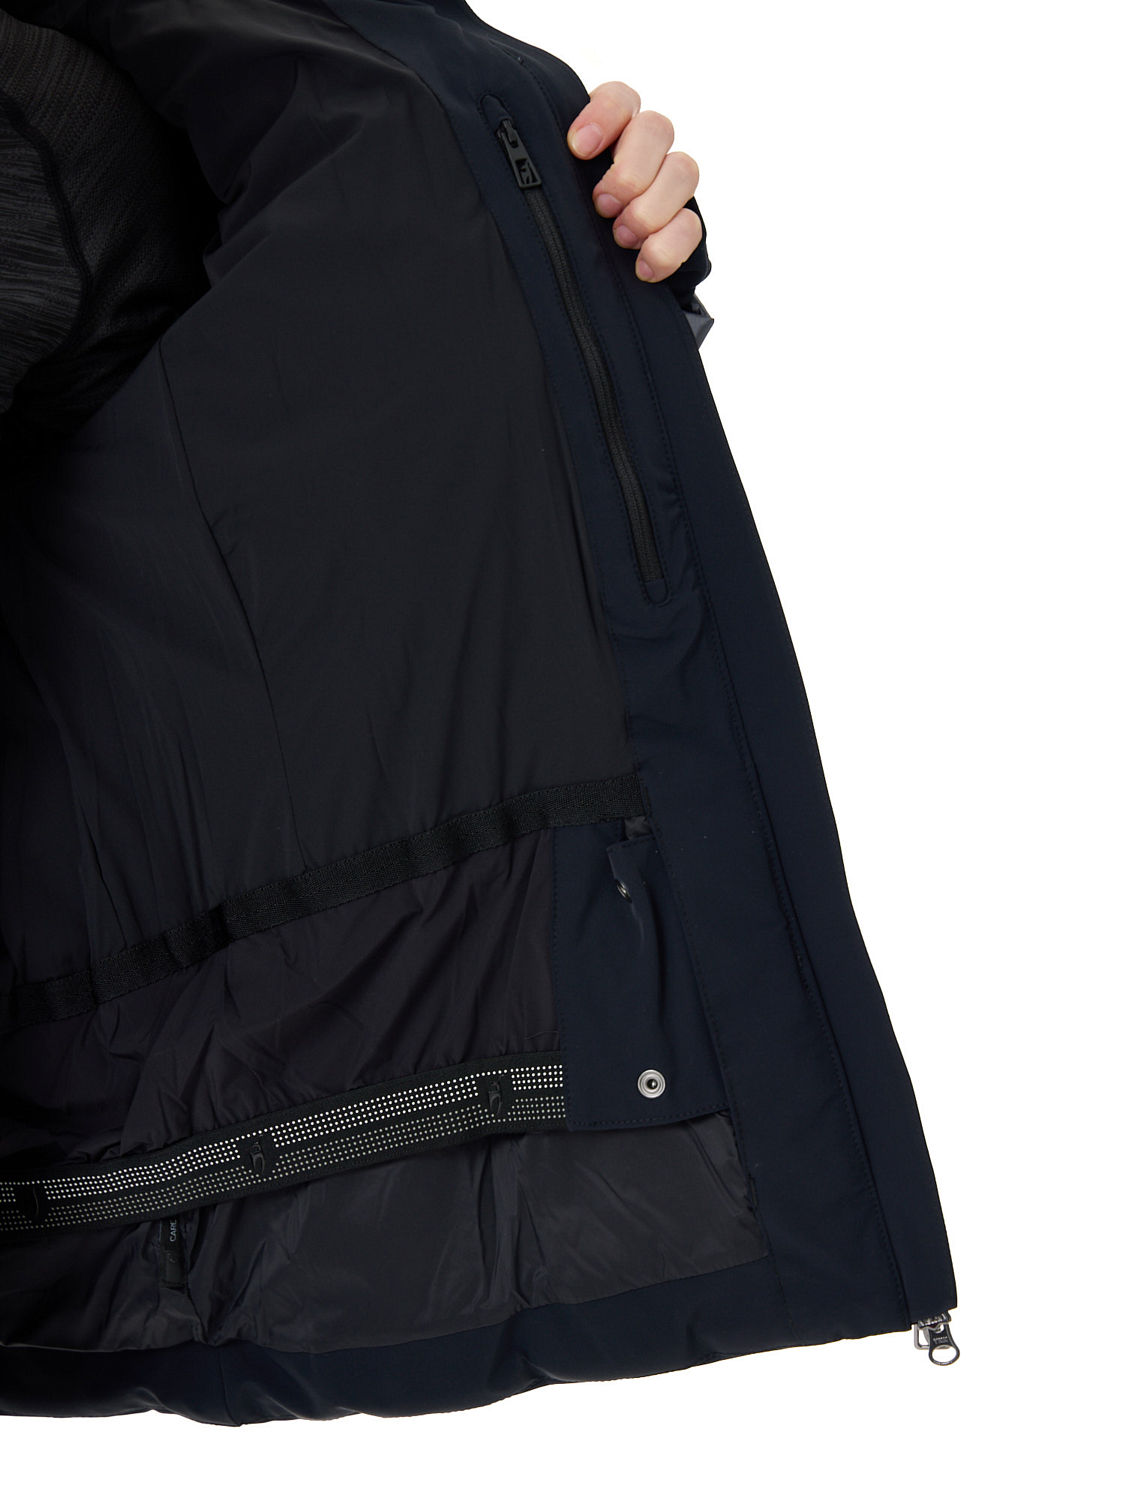 Куртка горнолыжная TONI SAILER с воротником Caytlyn Splendid + Shadowfox Snowtop Iron Gate/Black-Bright/White